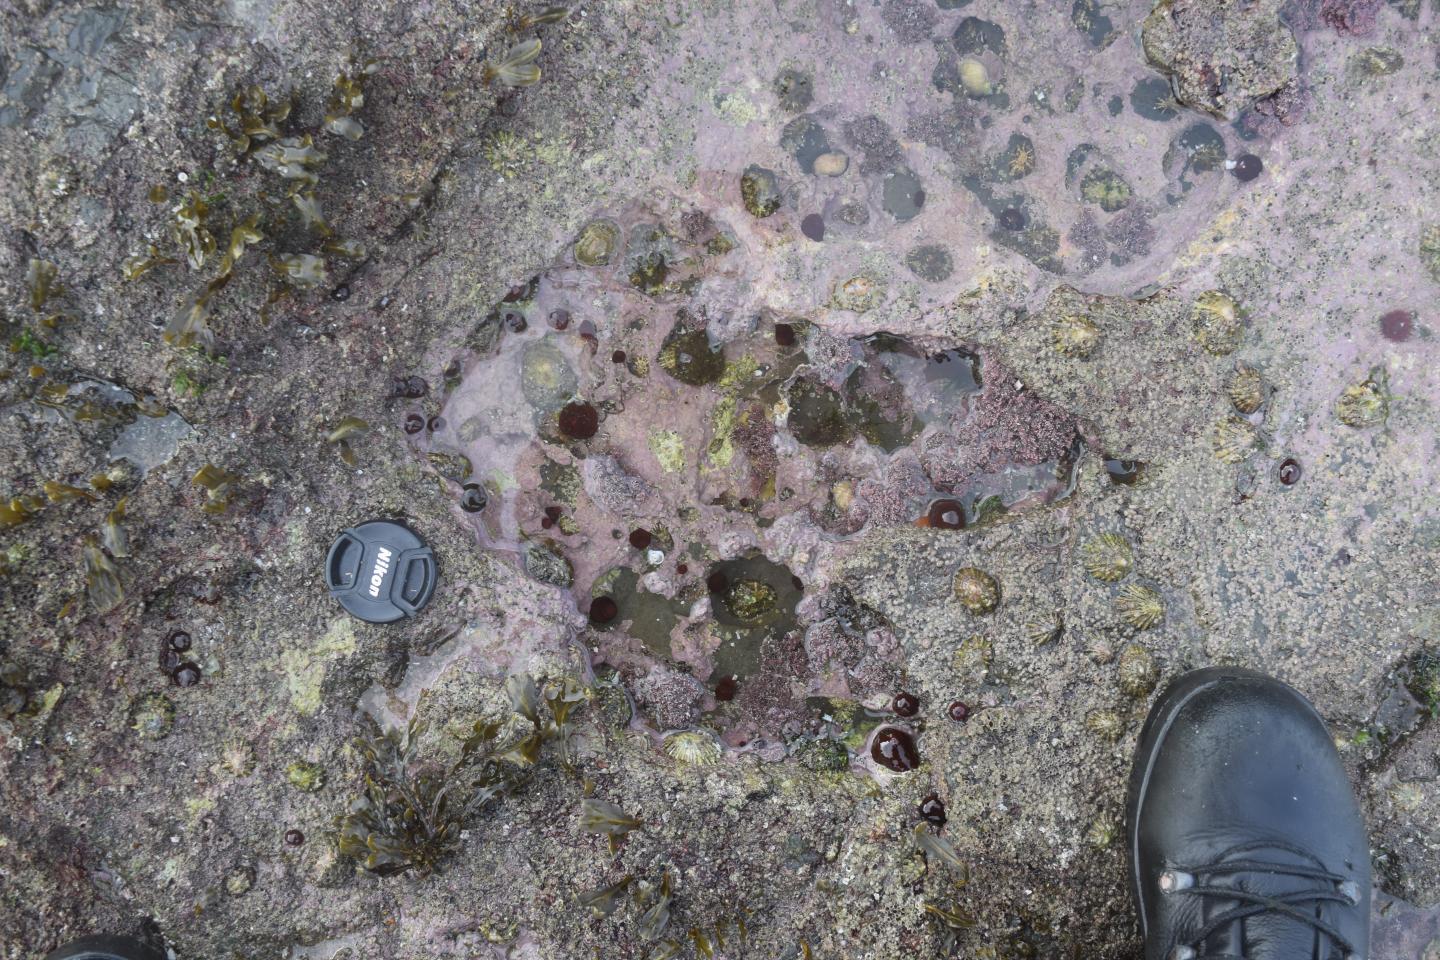 Footprint Made by a Theropod Dinosaur